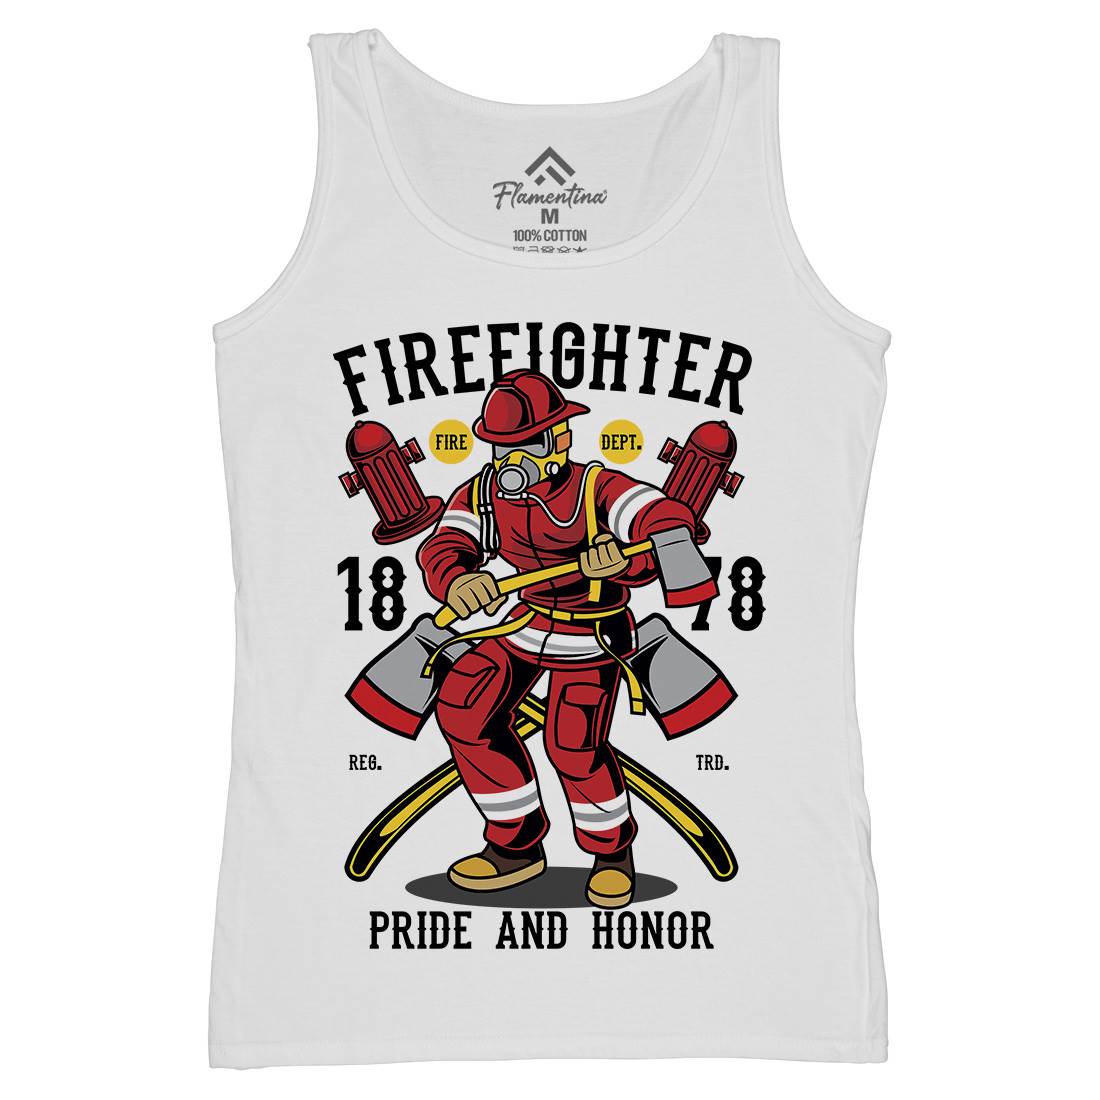 Fire Fighter Womens Organic Tank Top Vest Firefighters C358